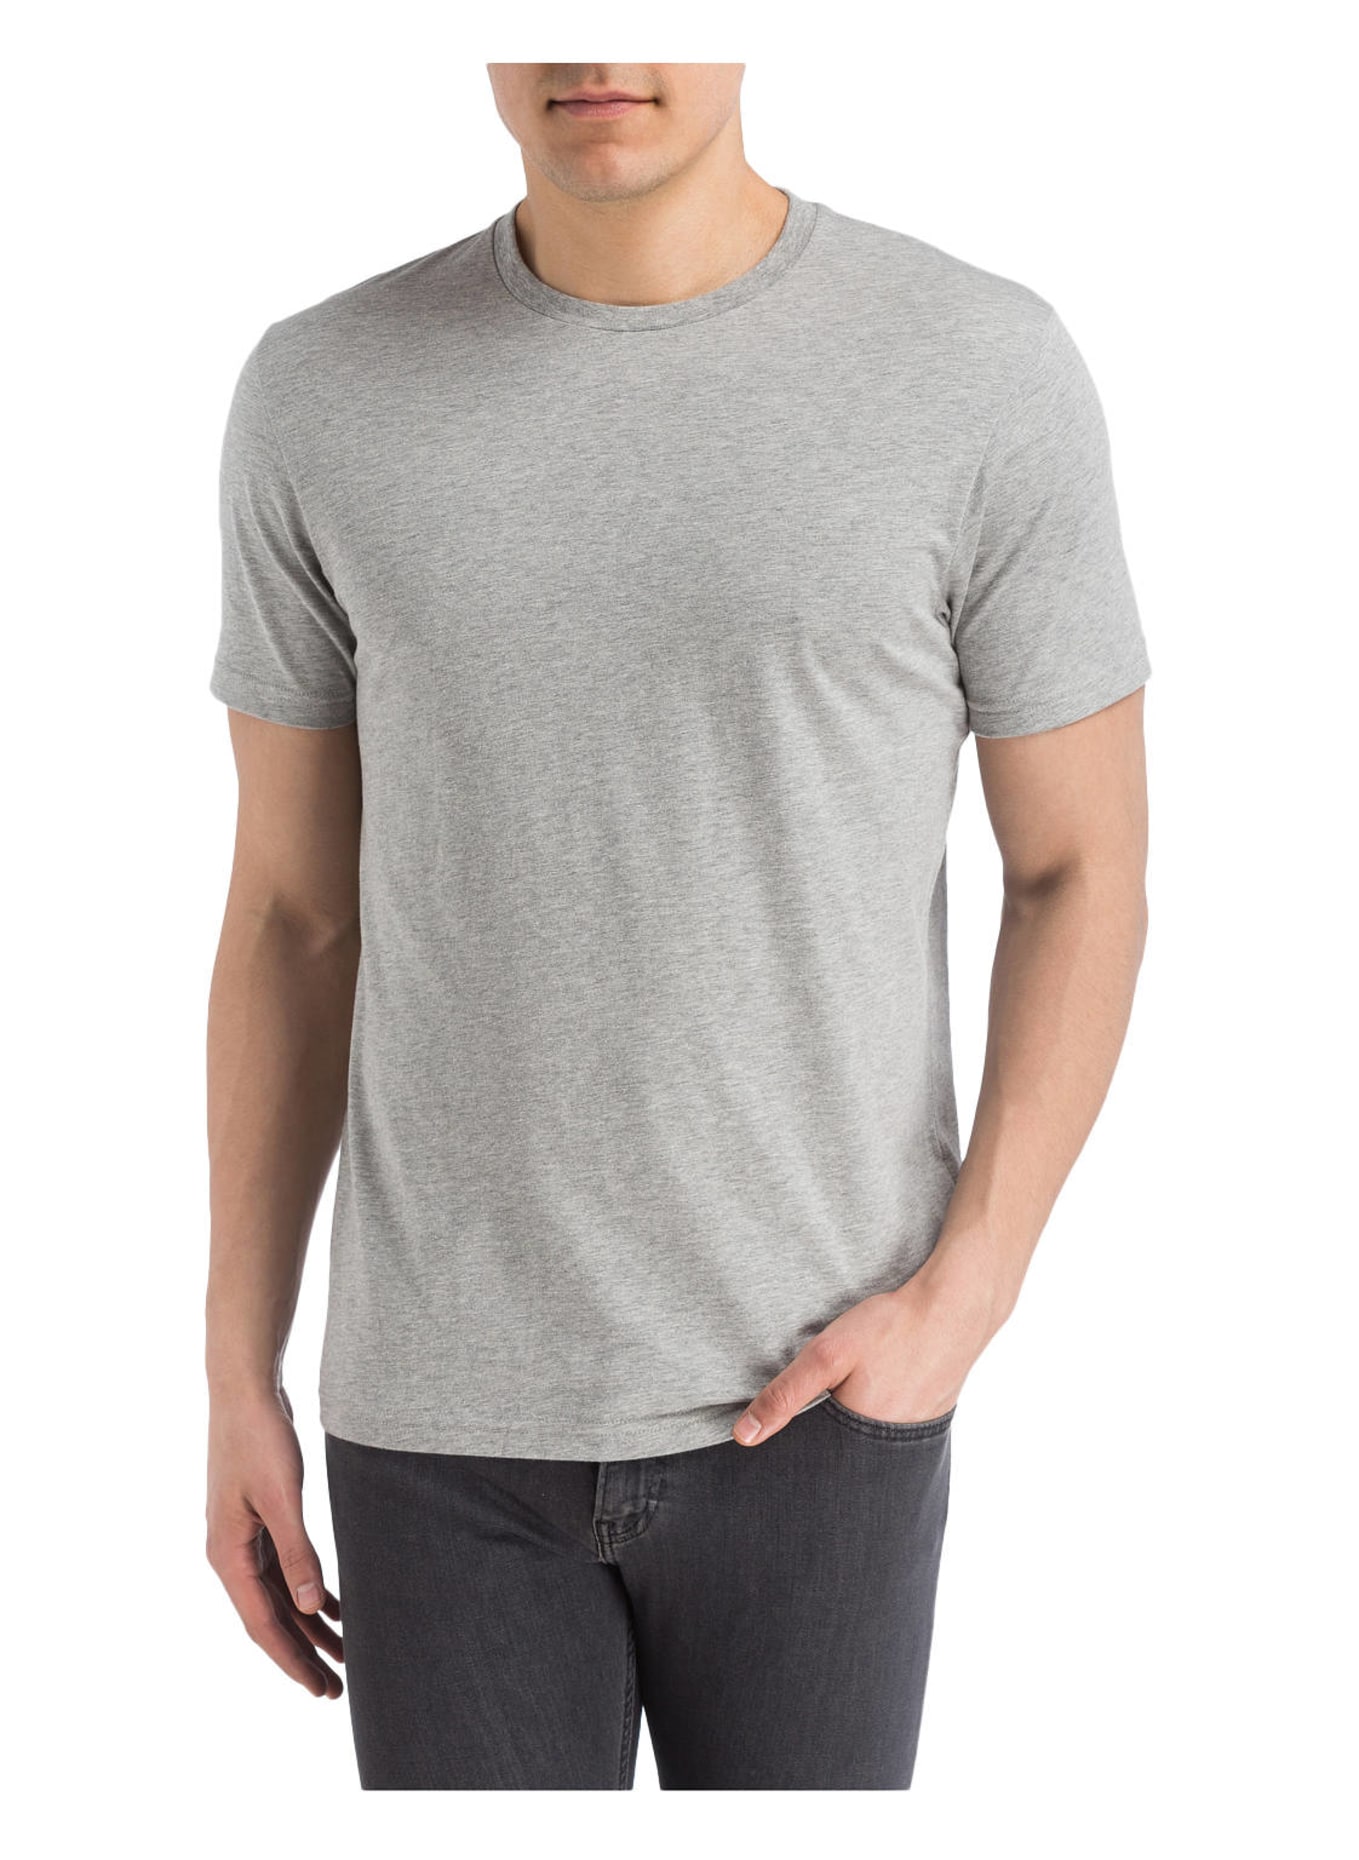 fit in T-shirt mélange RAGMAN gray regular